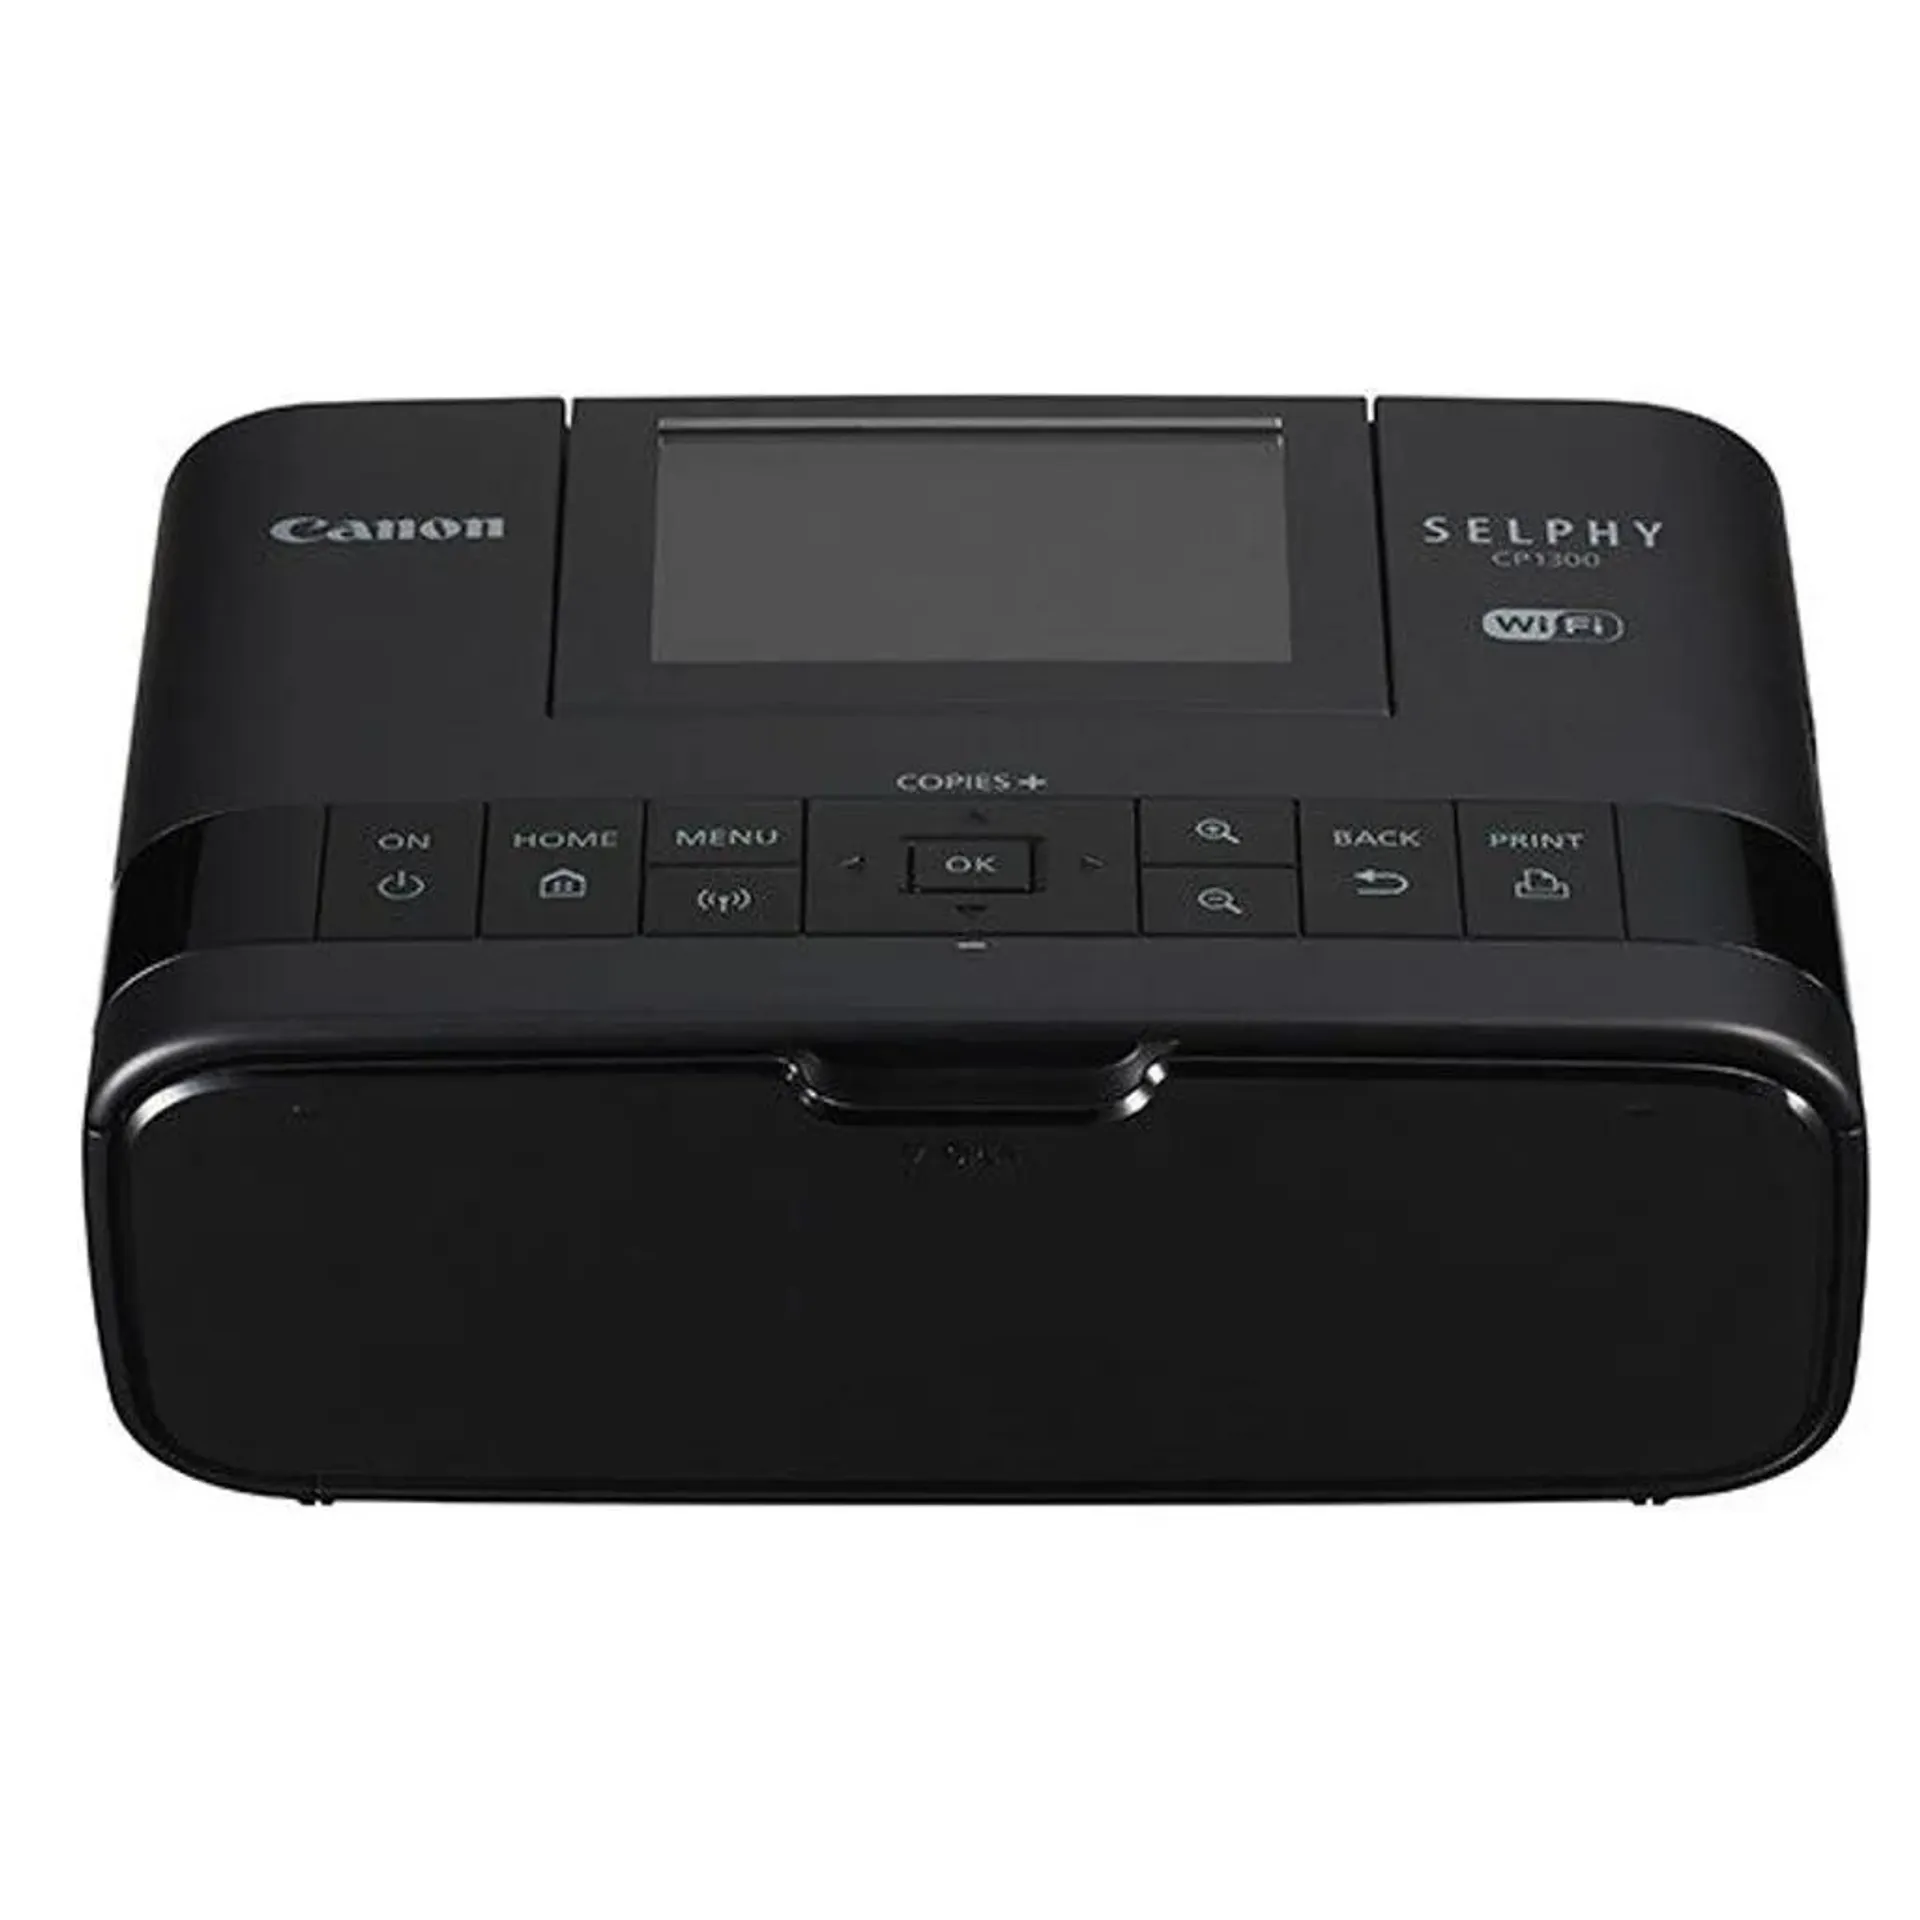 Selphy Printer - Compact Printer - Black